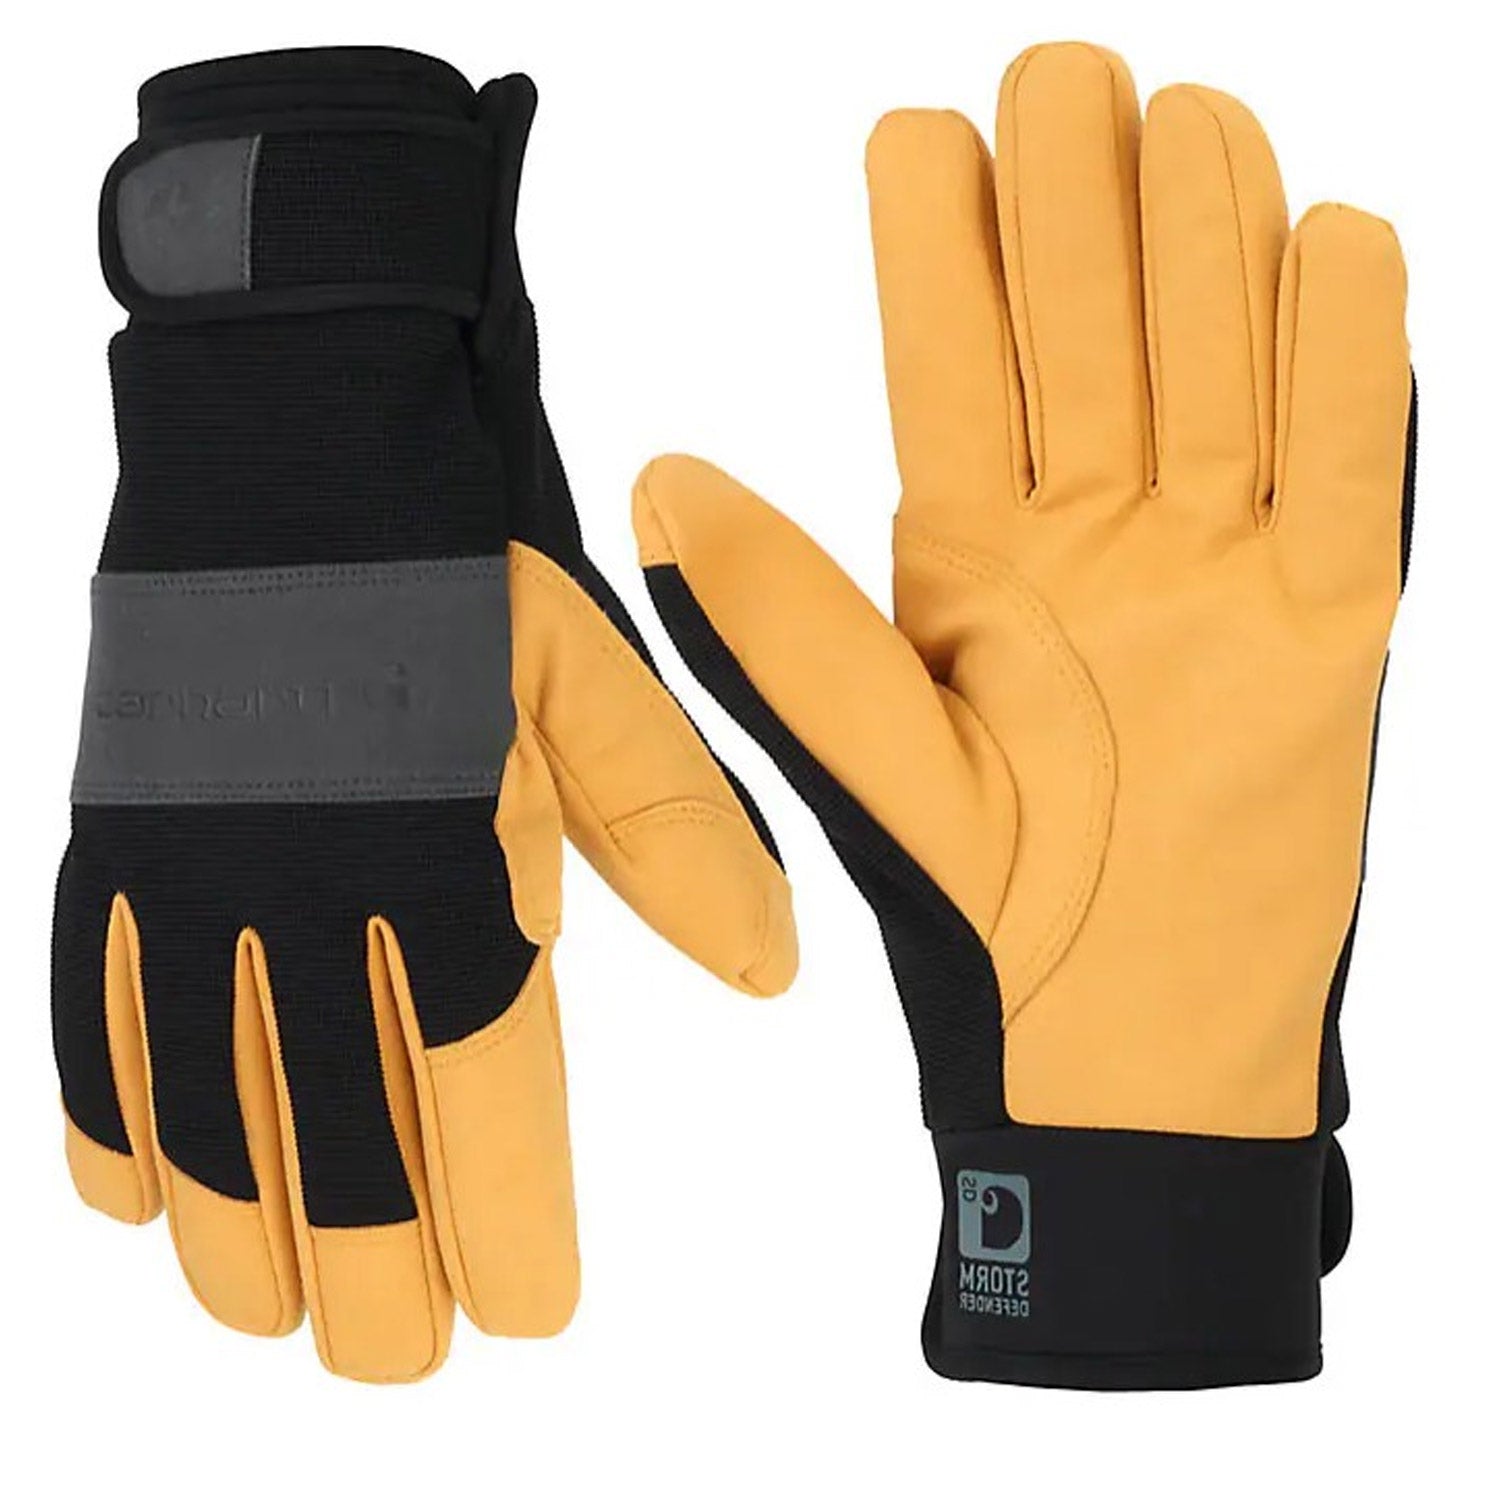 Carhartt Men's Waterproof Breathable High Dexterity Glove - Work World - Workwear, Work Boots, Safety Gear